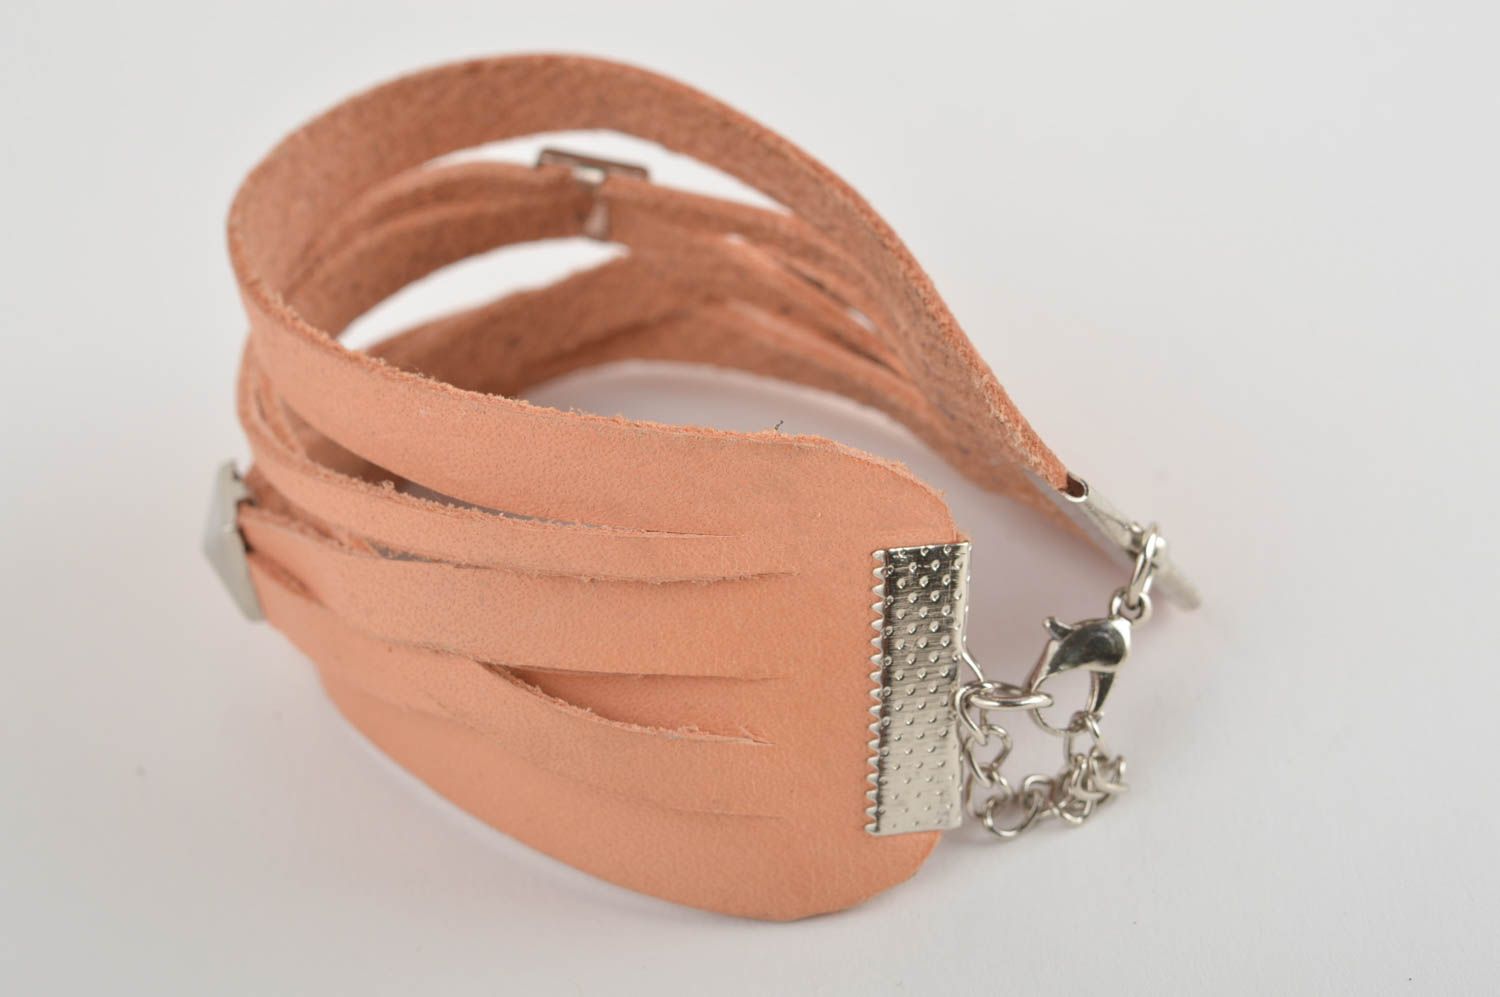 Handmade leather bracelet wrist bracelet designer jewelry gifts for girls photo 5